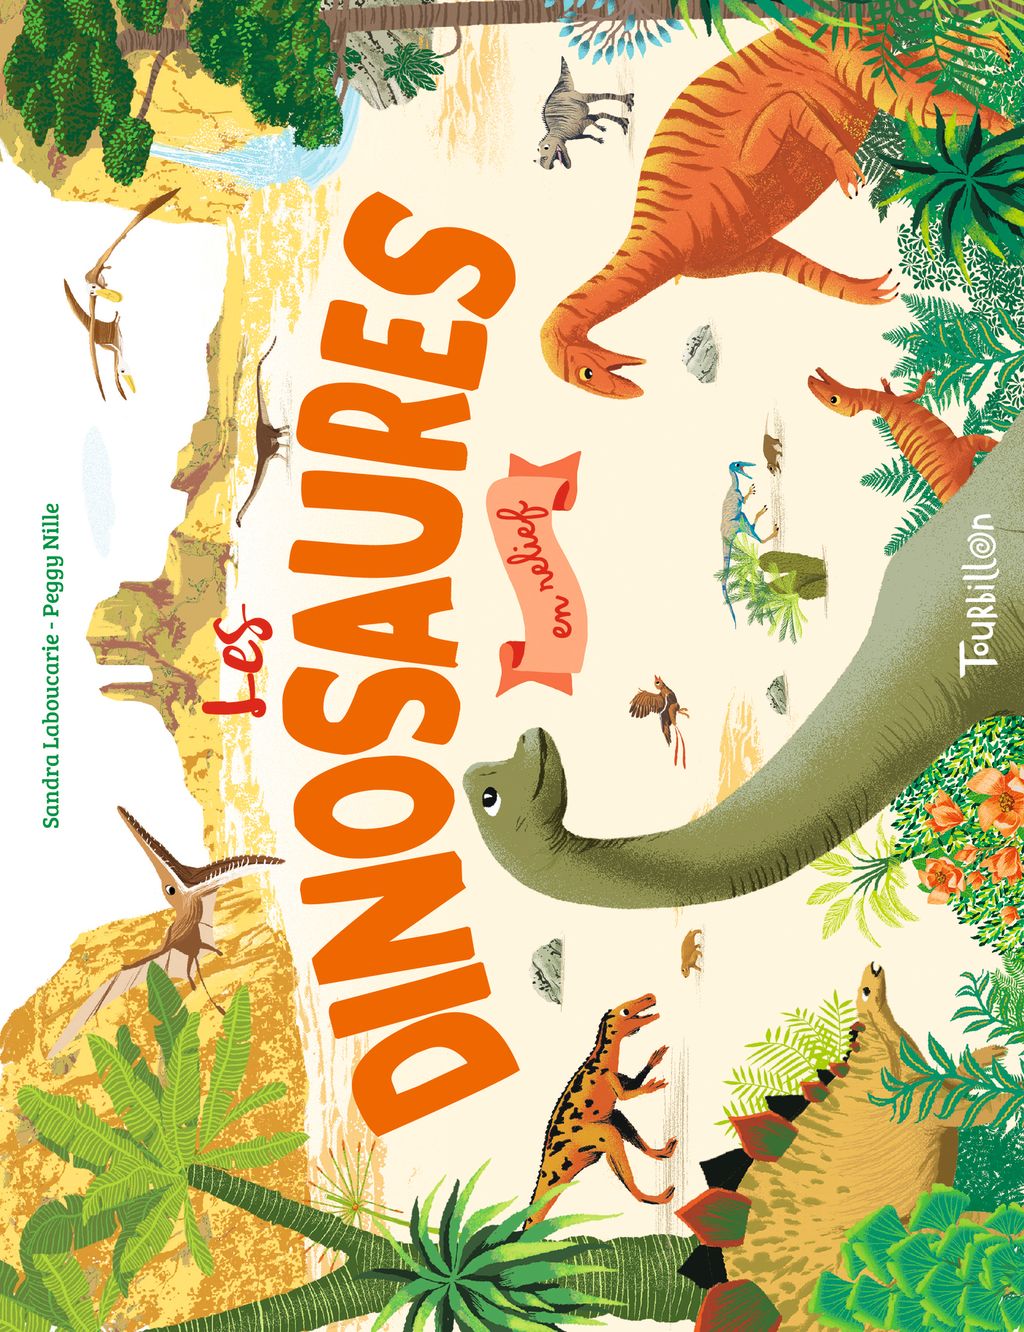 « Les dinosaures en relief » cover